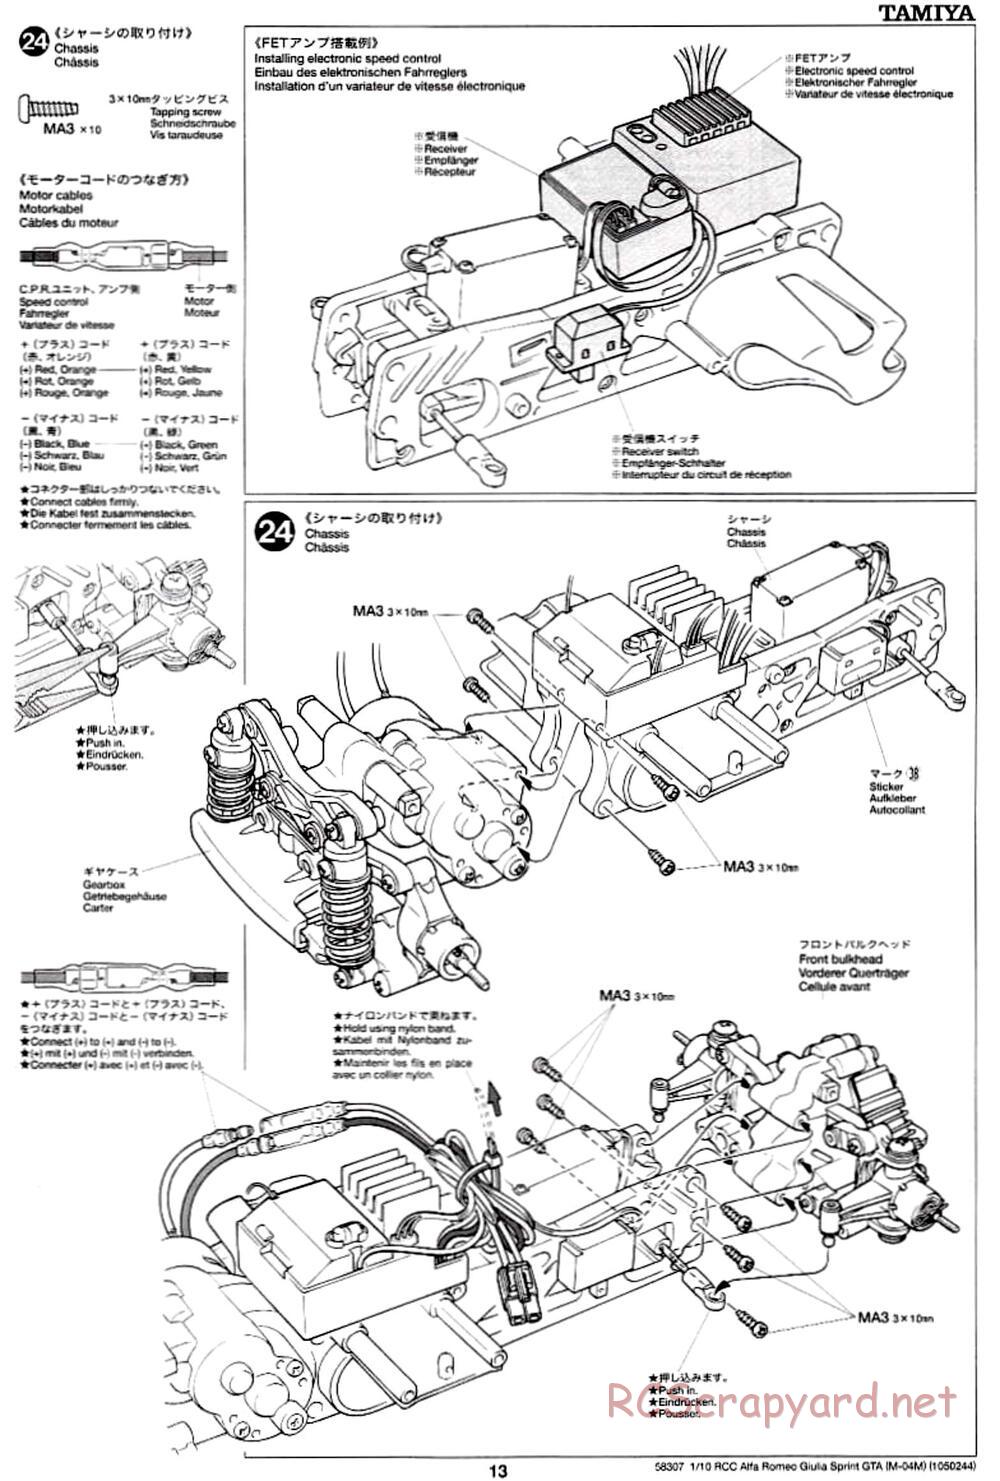 Tamiya - Alfa Romeo Giulia Sprint GTA - M04M Chassis - Manual - Page 13